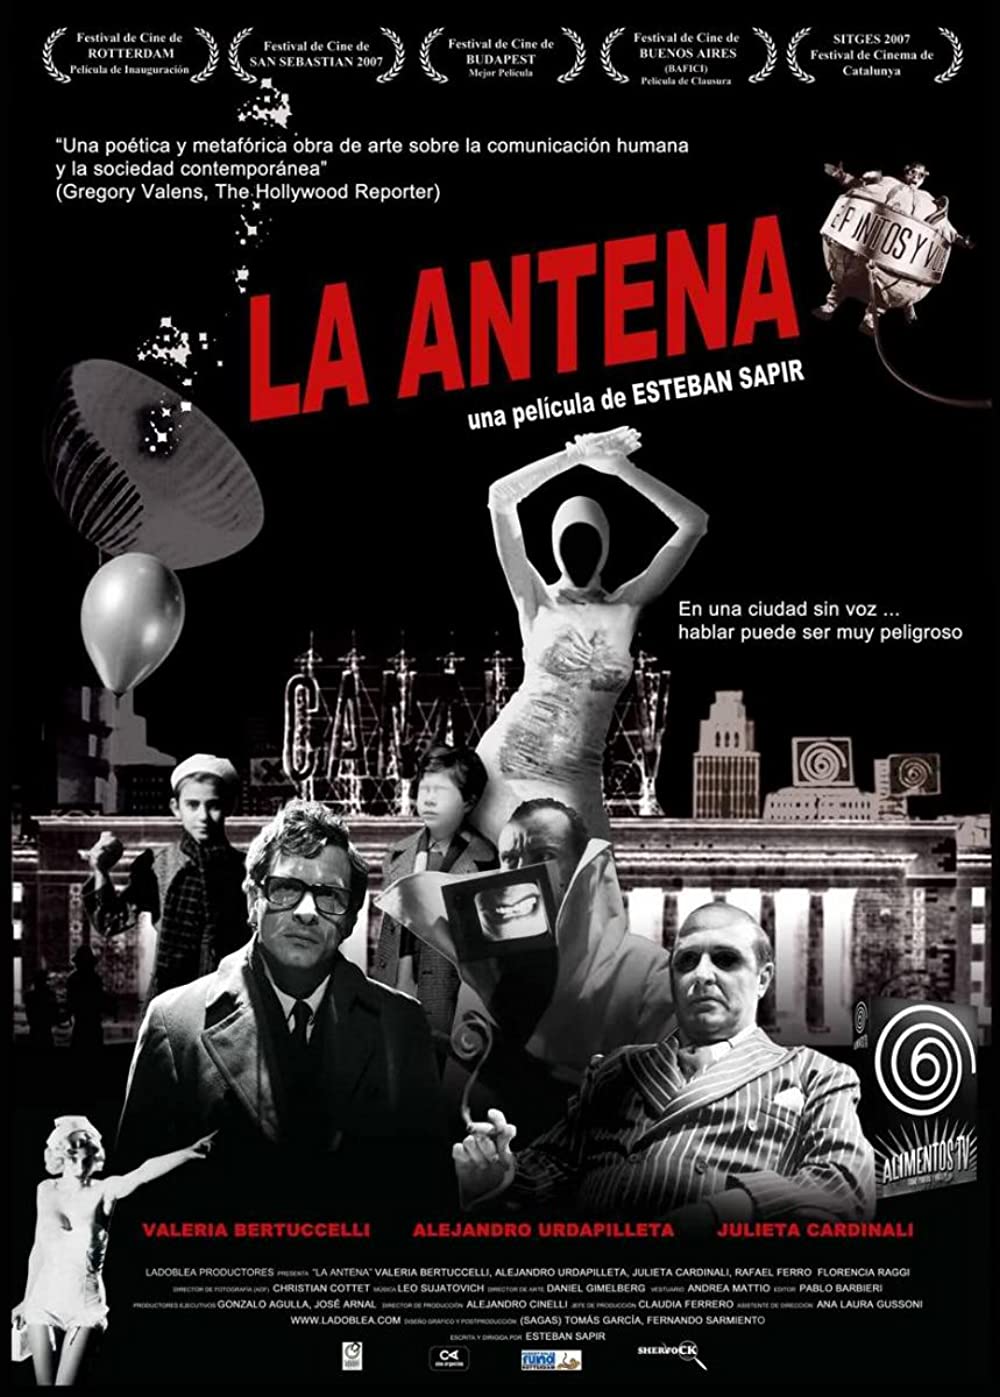 Filmbeschreibung zu La Antena